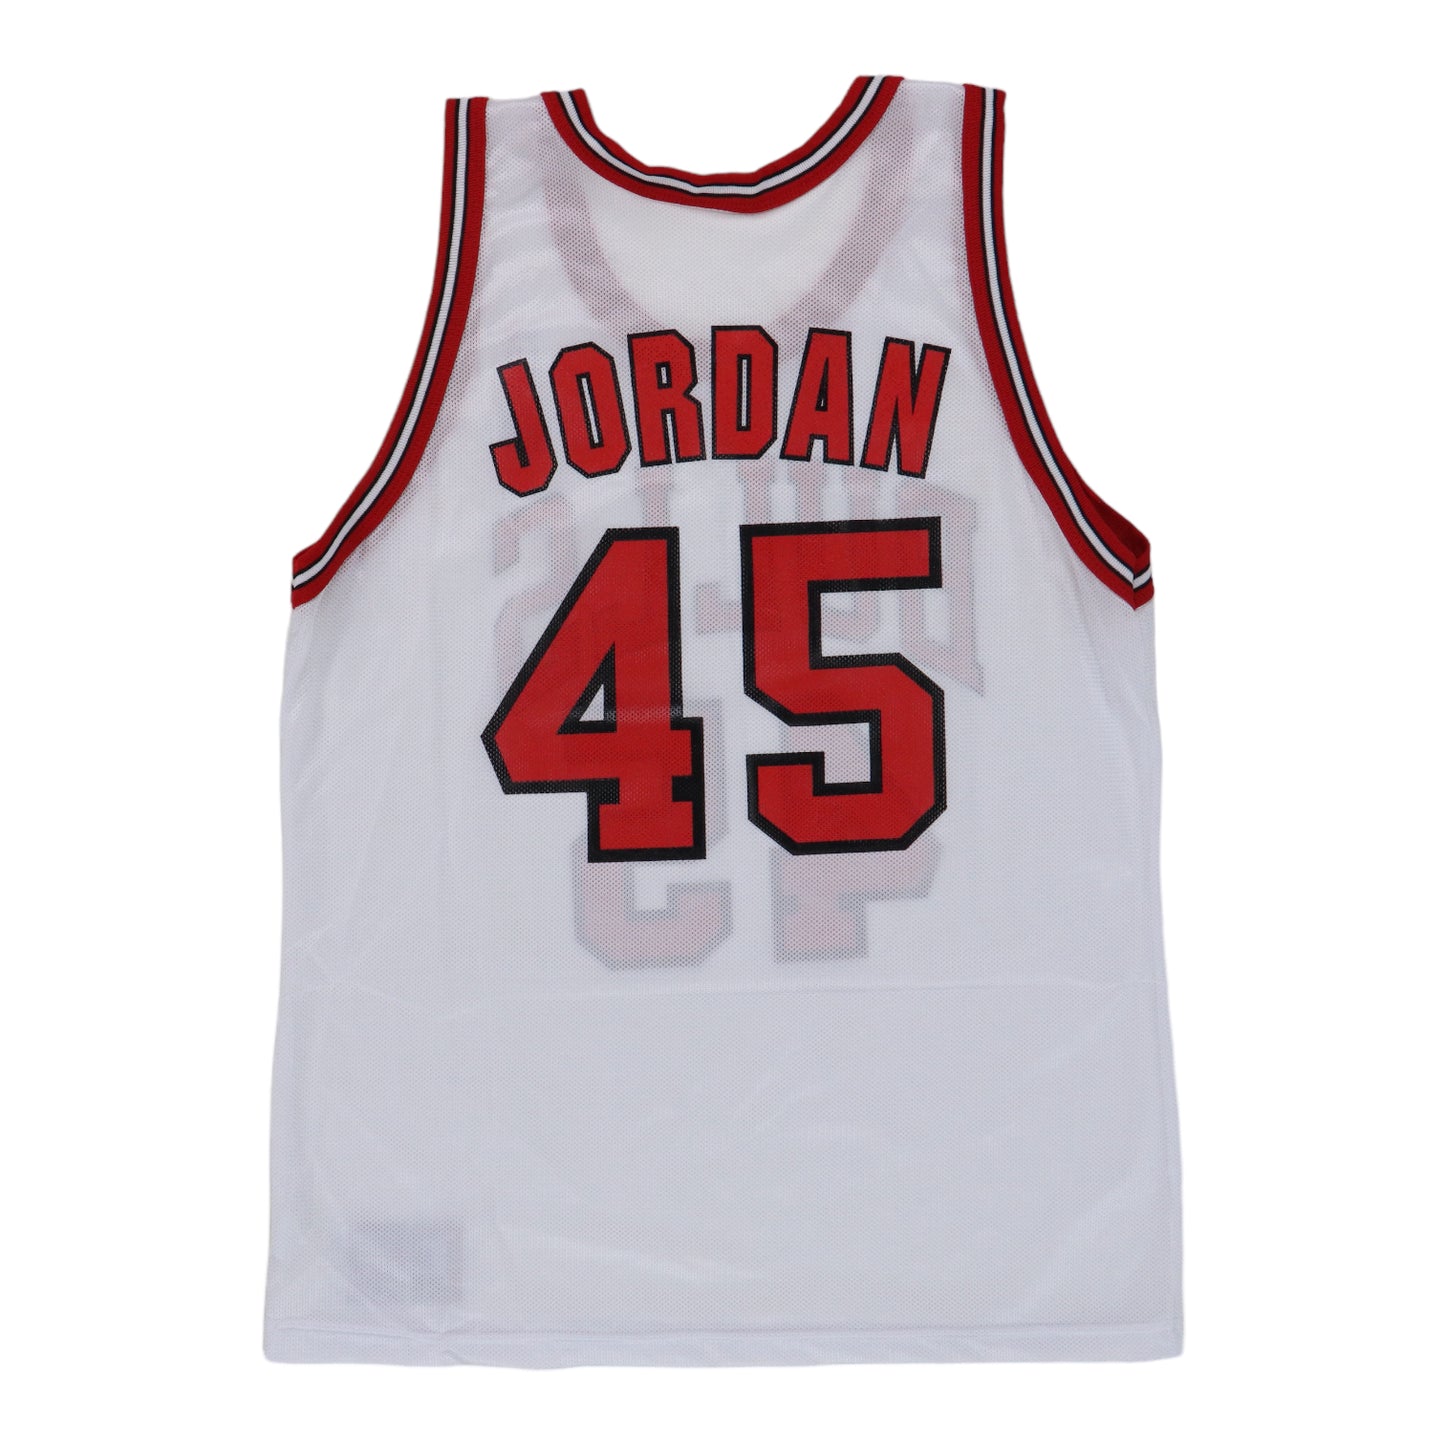 Wyco Vintage 1990s Scottie Pippen Chicago Bulls NBA Basketball Jersey